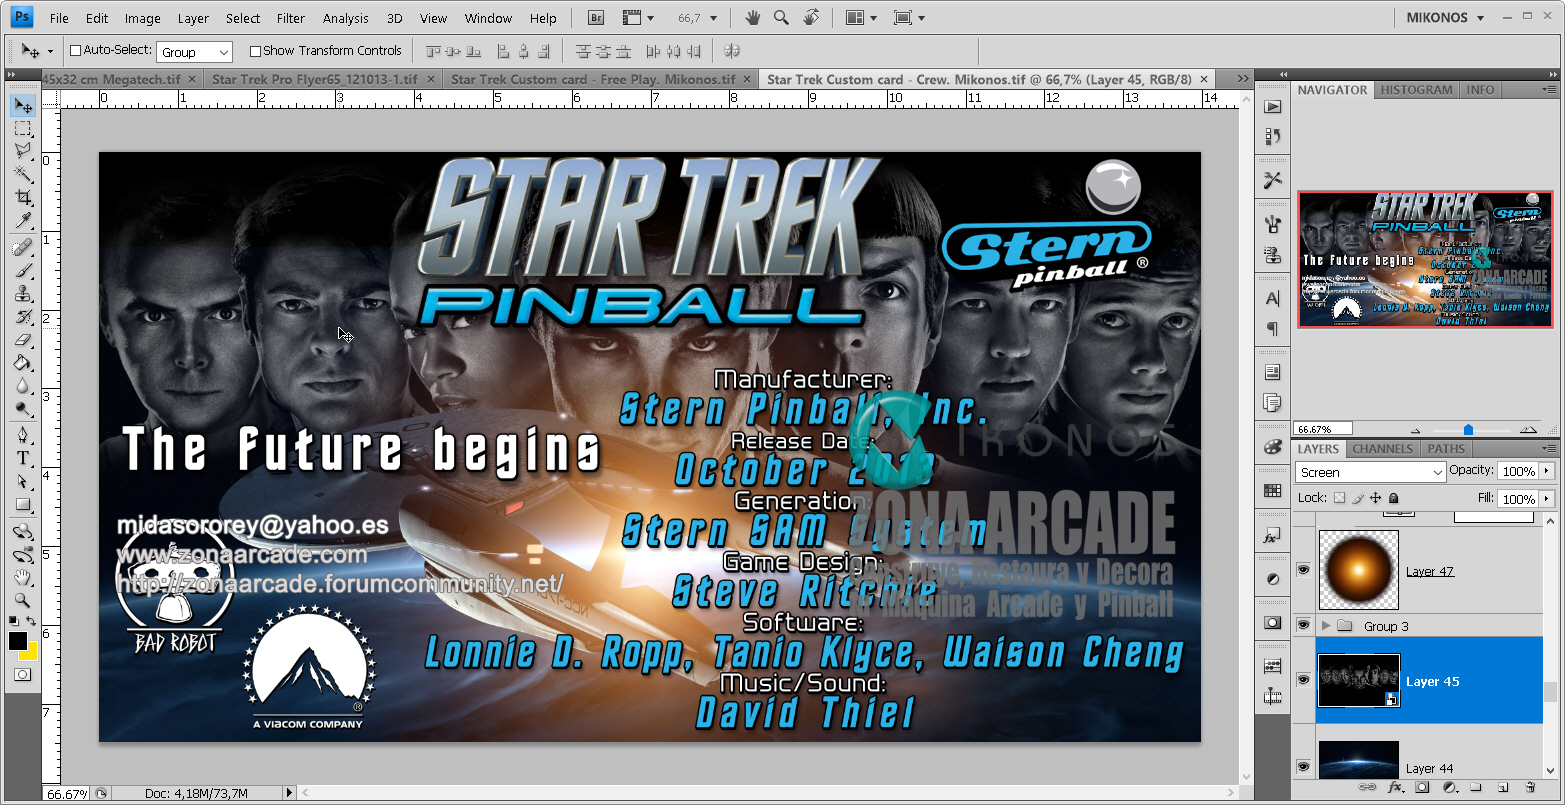 Star-Trek-Custom-Pinball-Card-Crew2-Mikonos1